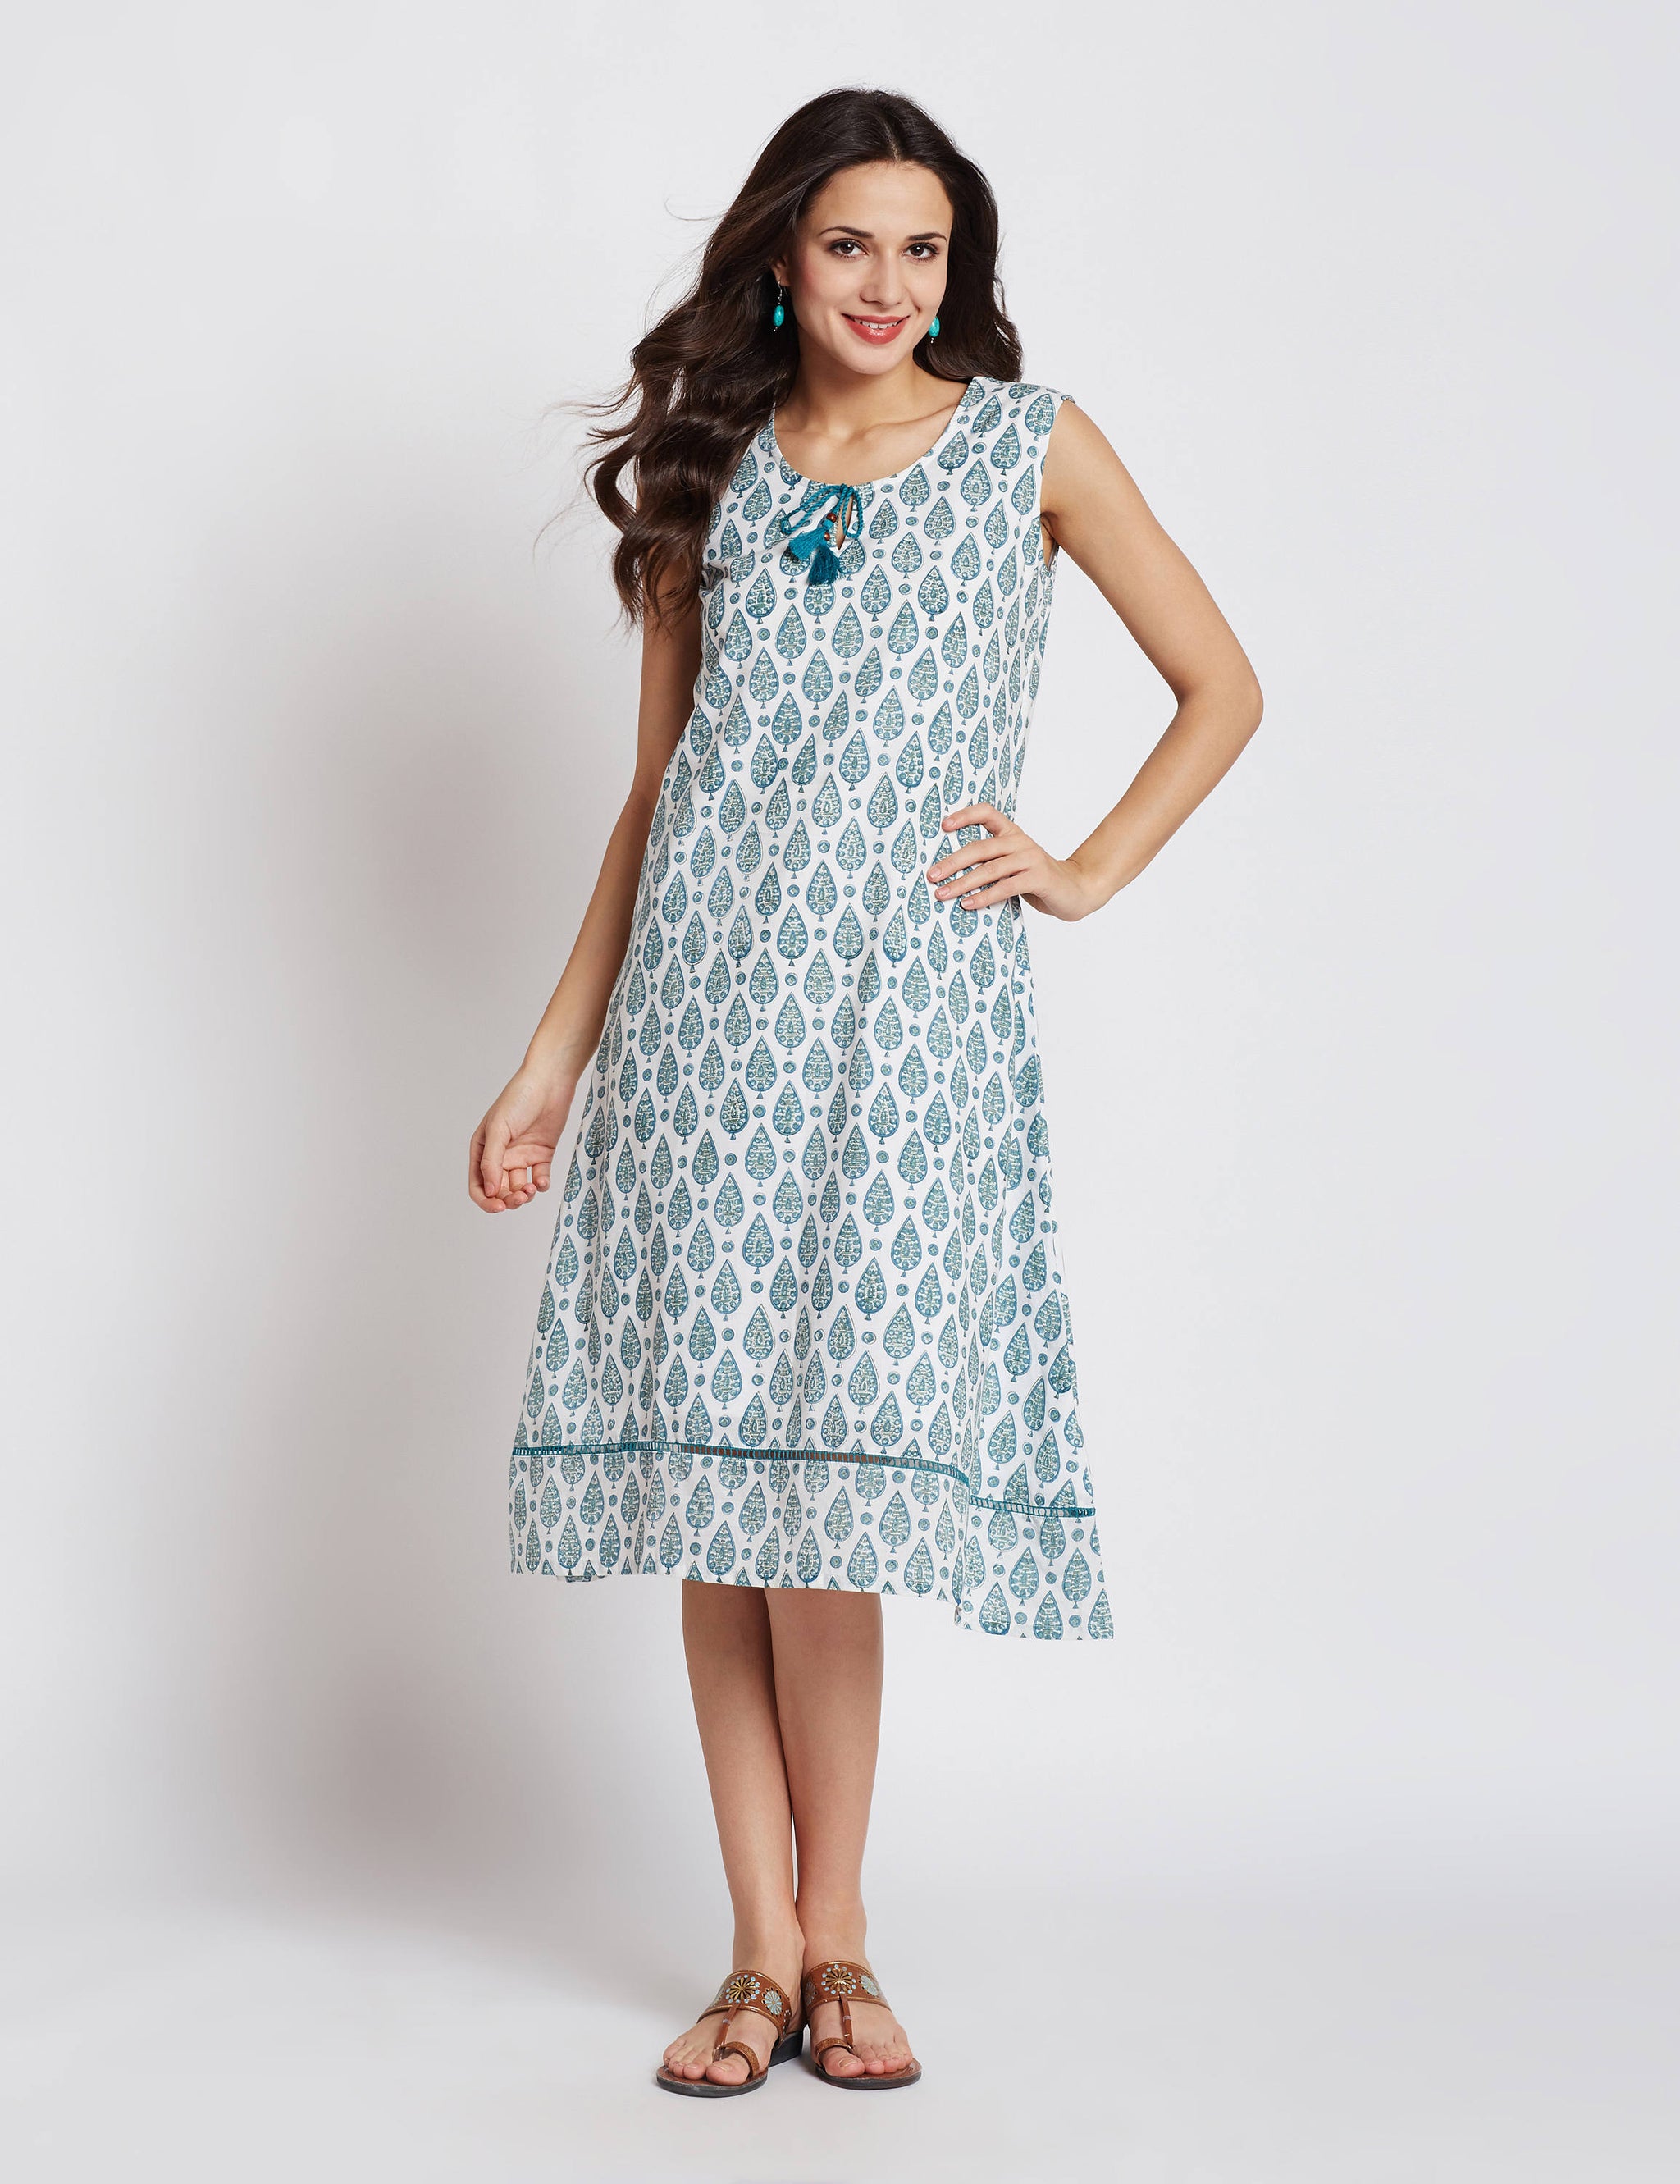 Hand block one piece sleeveless white dress with aqua green leaf print